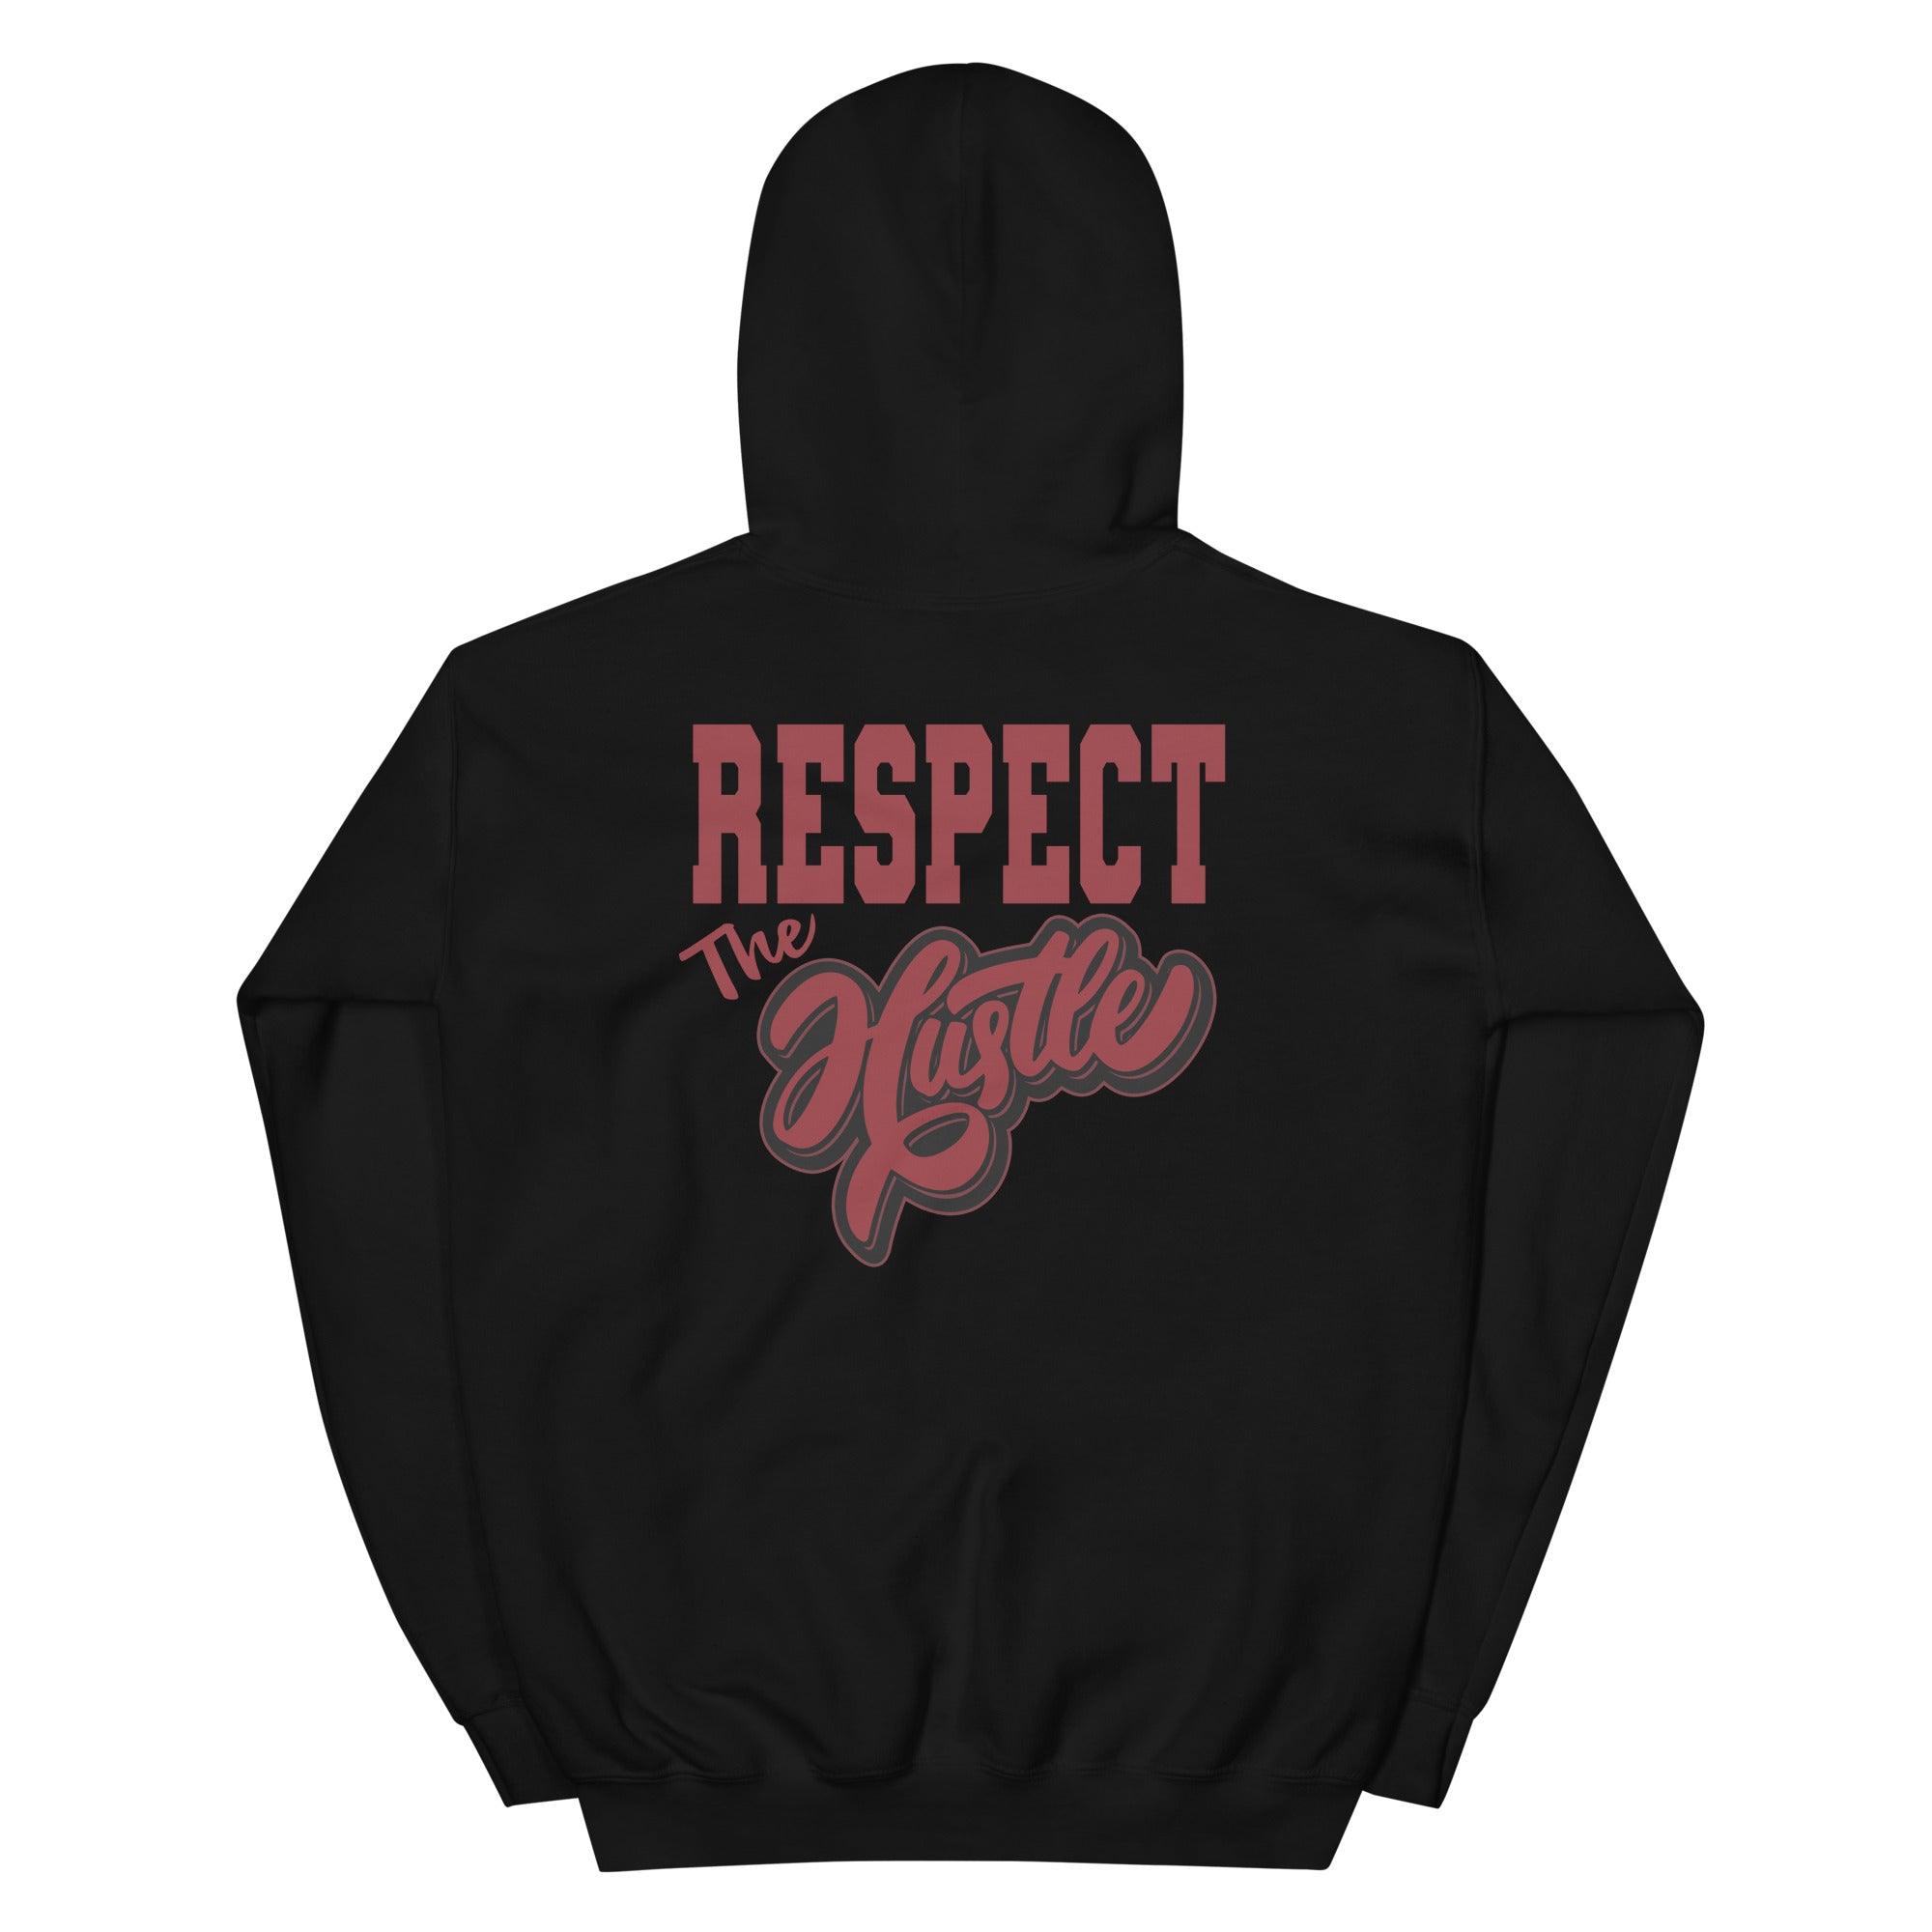 Respect The Hustle Sneaker Sweatshirt AJ 12s Retro Reverse Flu Game photo